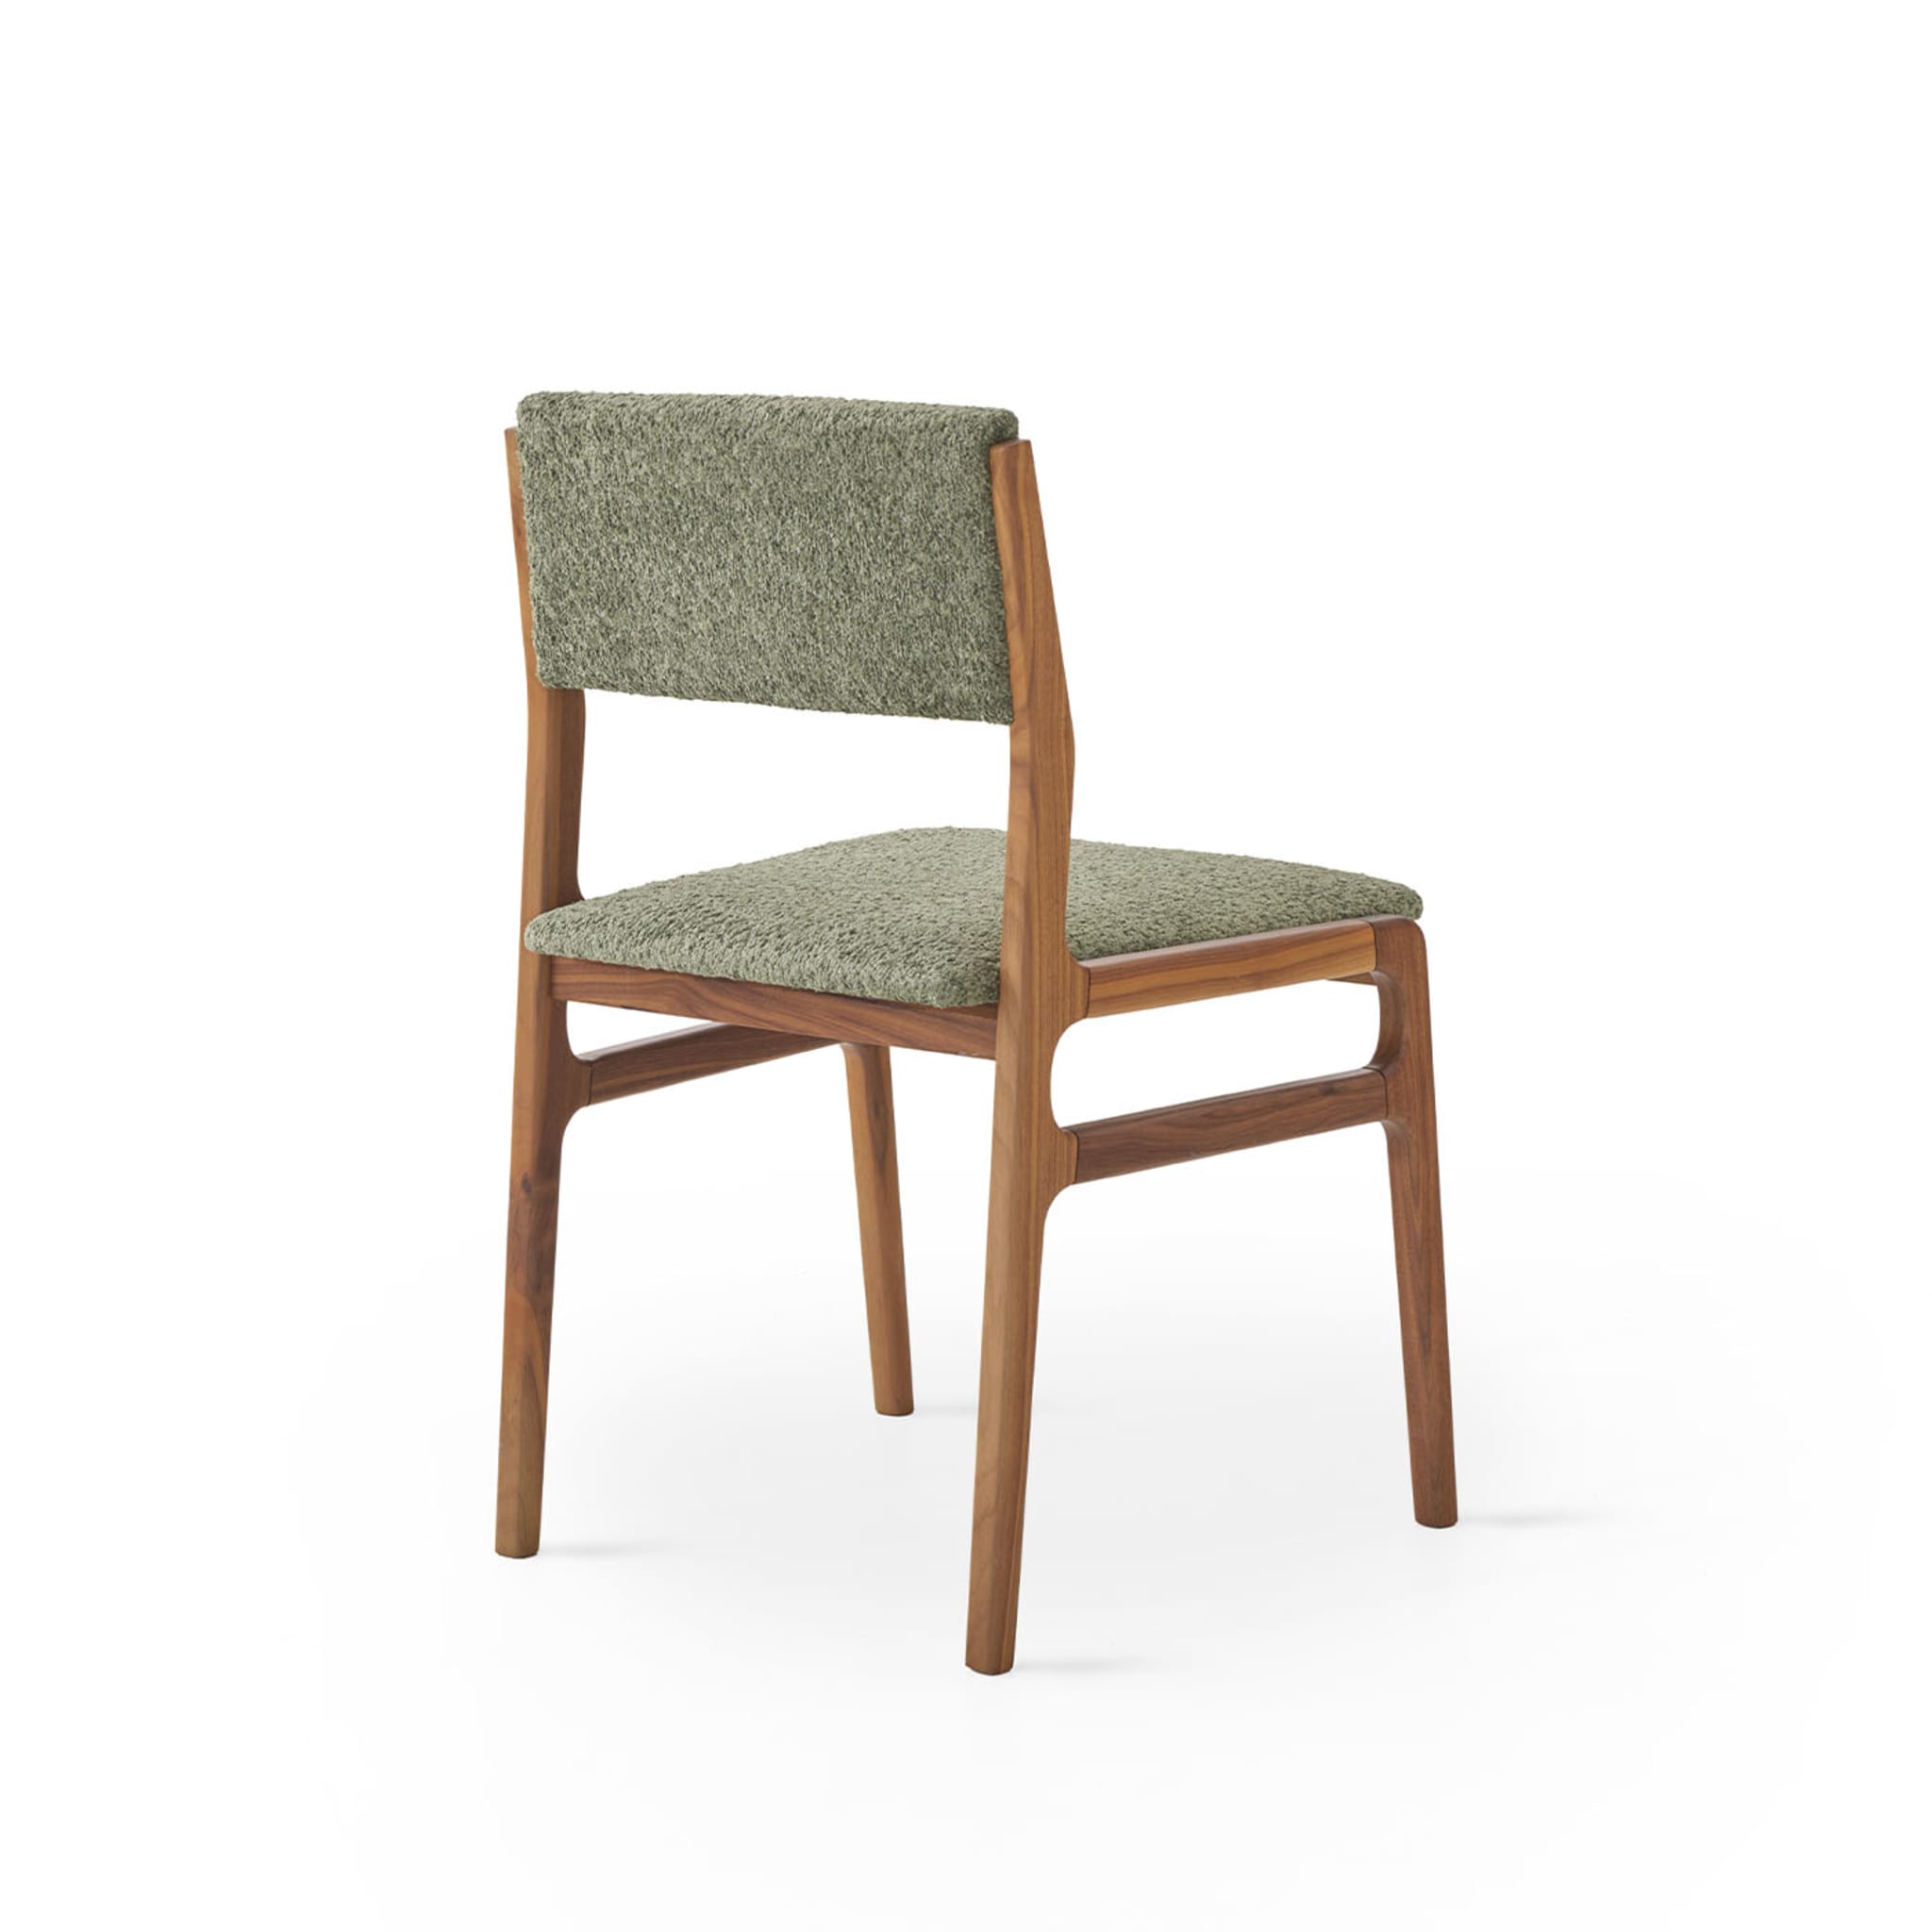 Shangai Olive-Green & Walnut Chair - Alternative view 1